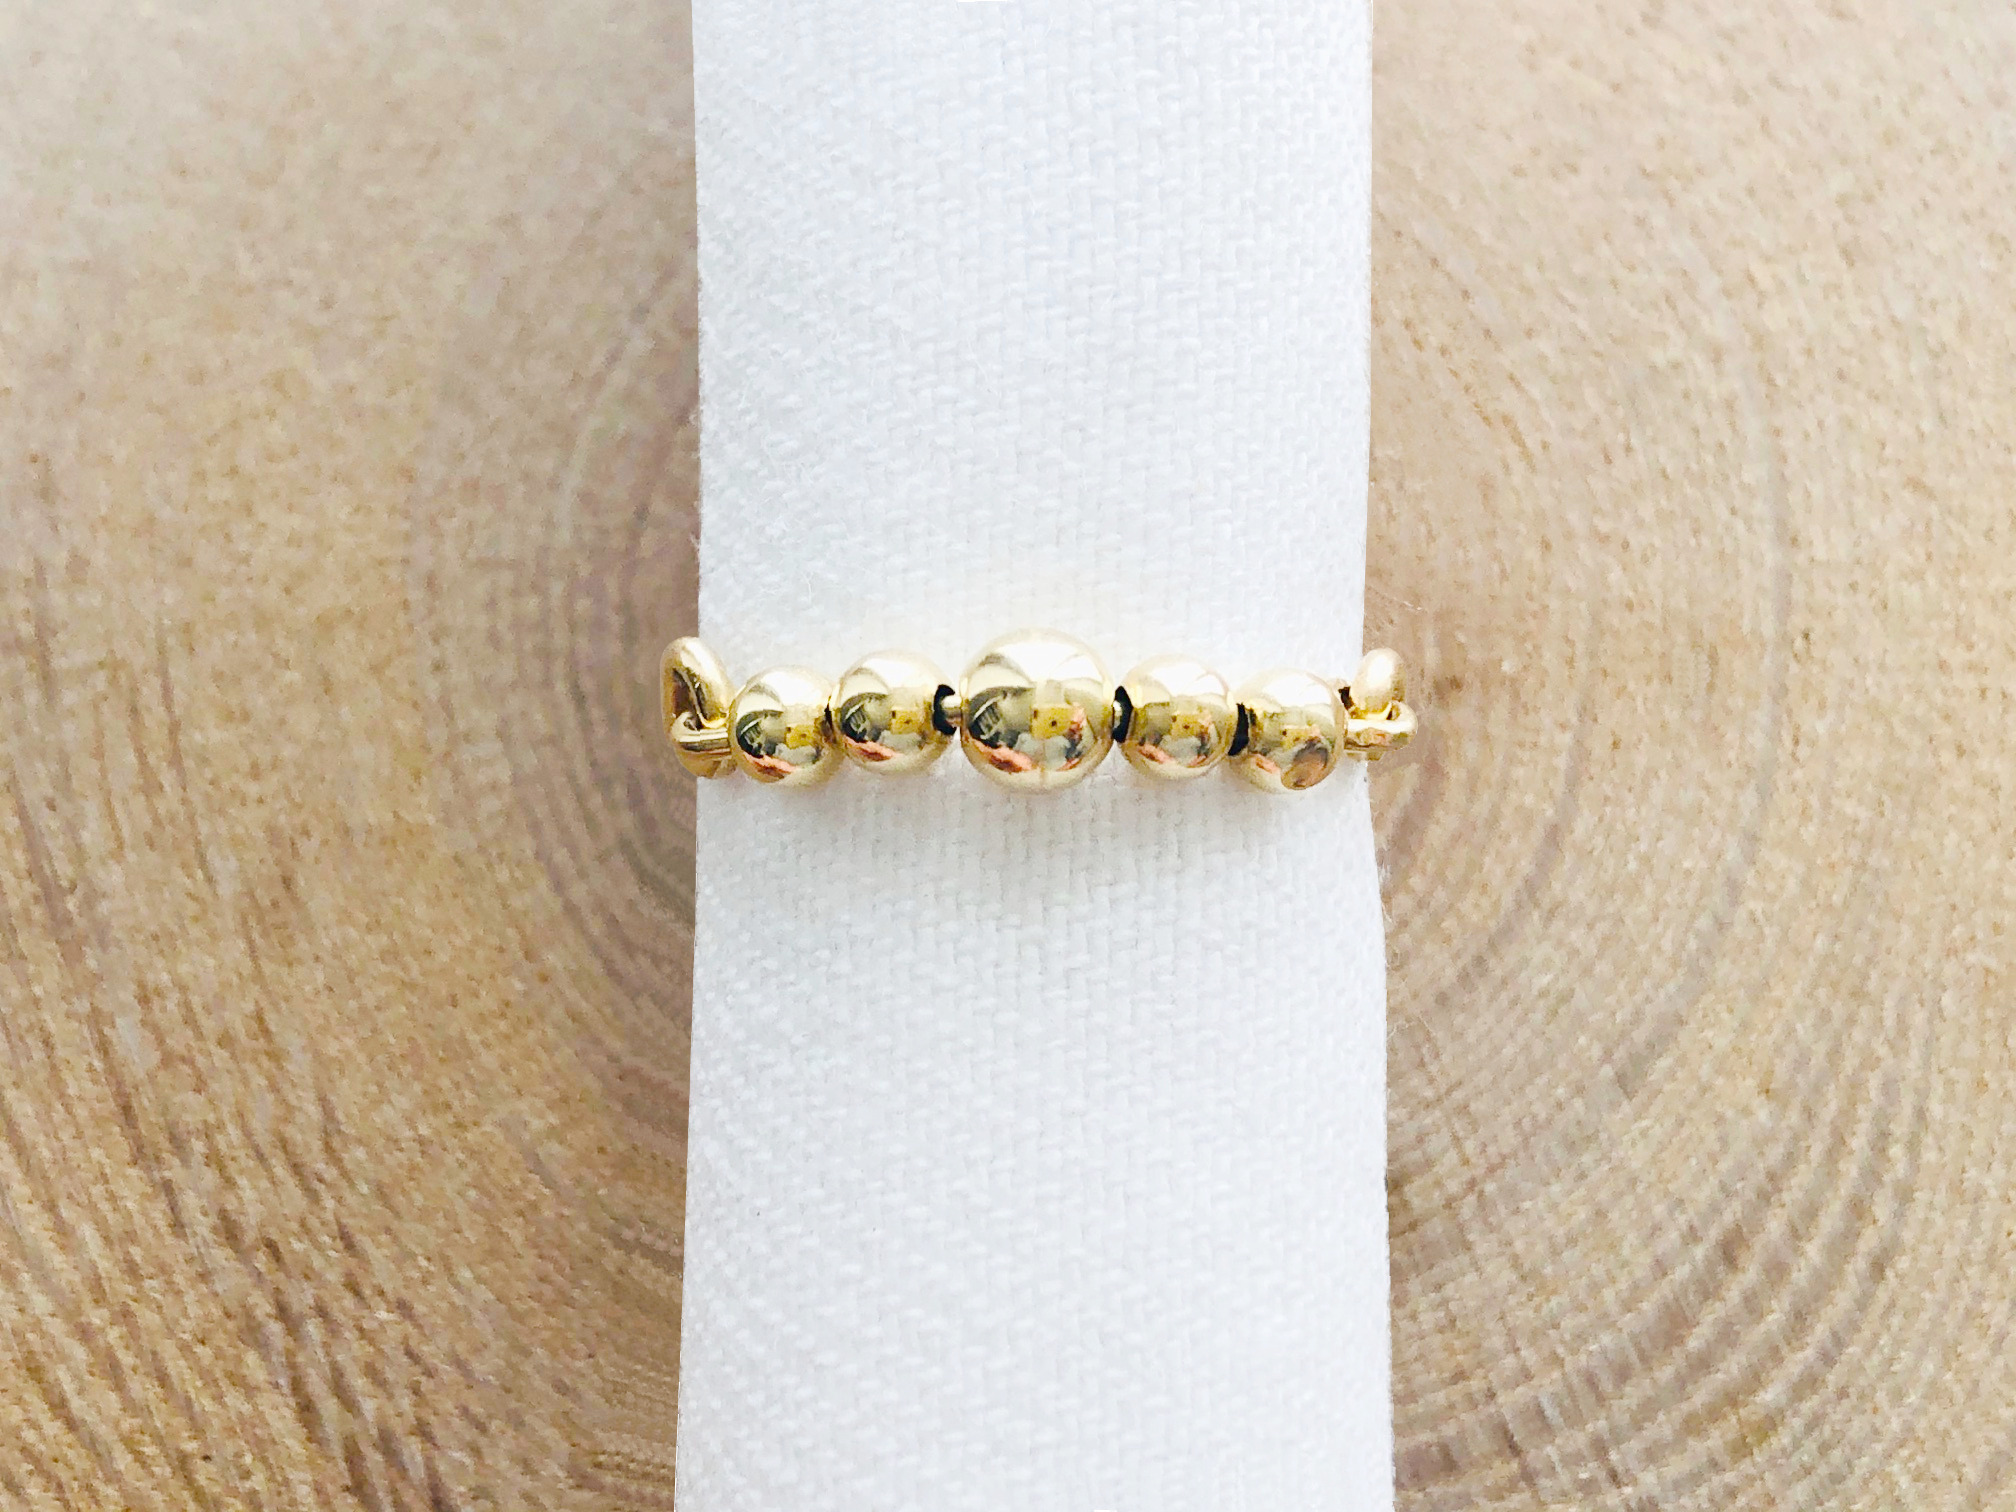 Bague LINA or gold filled 14k anneau et perles-minimaliste